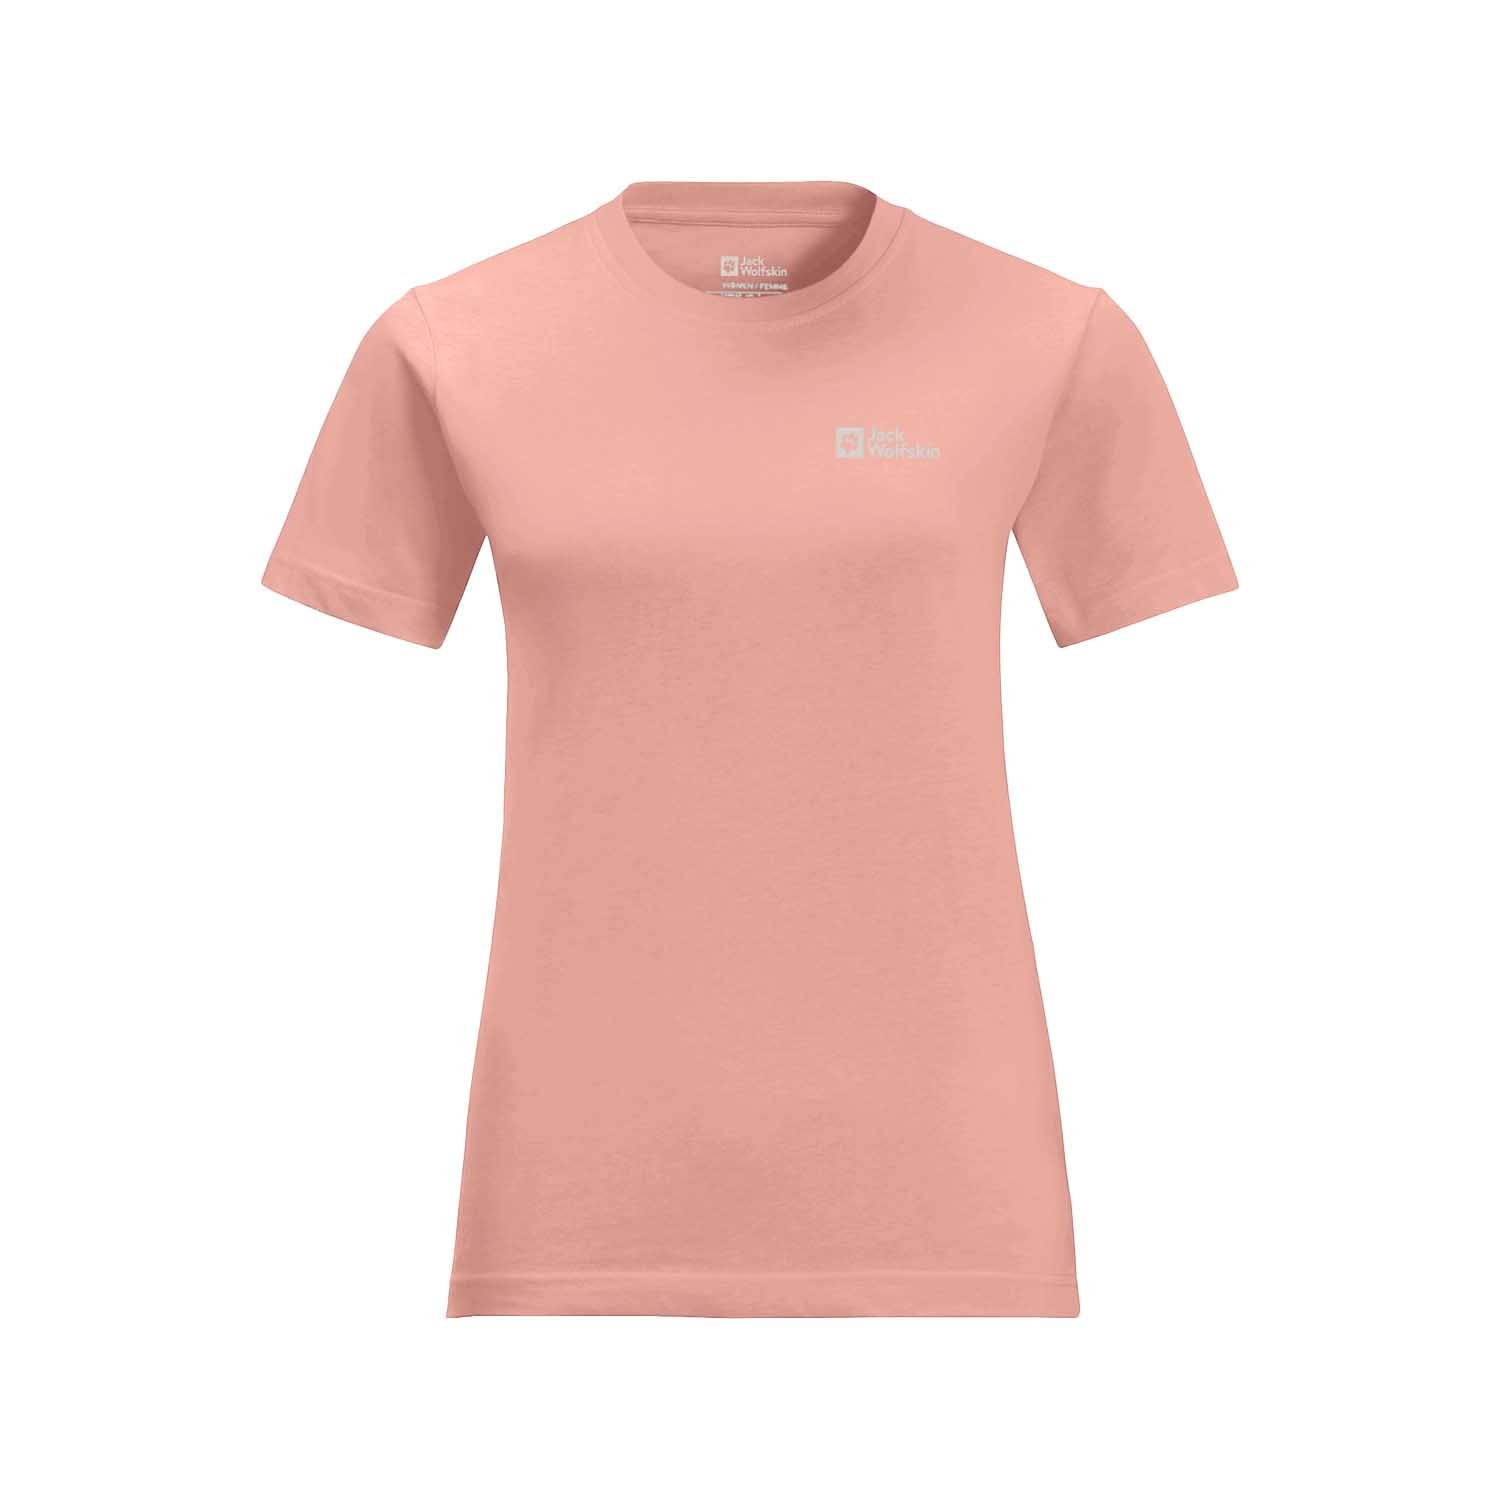 Jack Wolfskin Essential Kadın Tişört - Renkli - 1